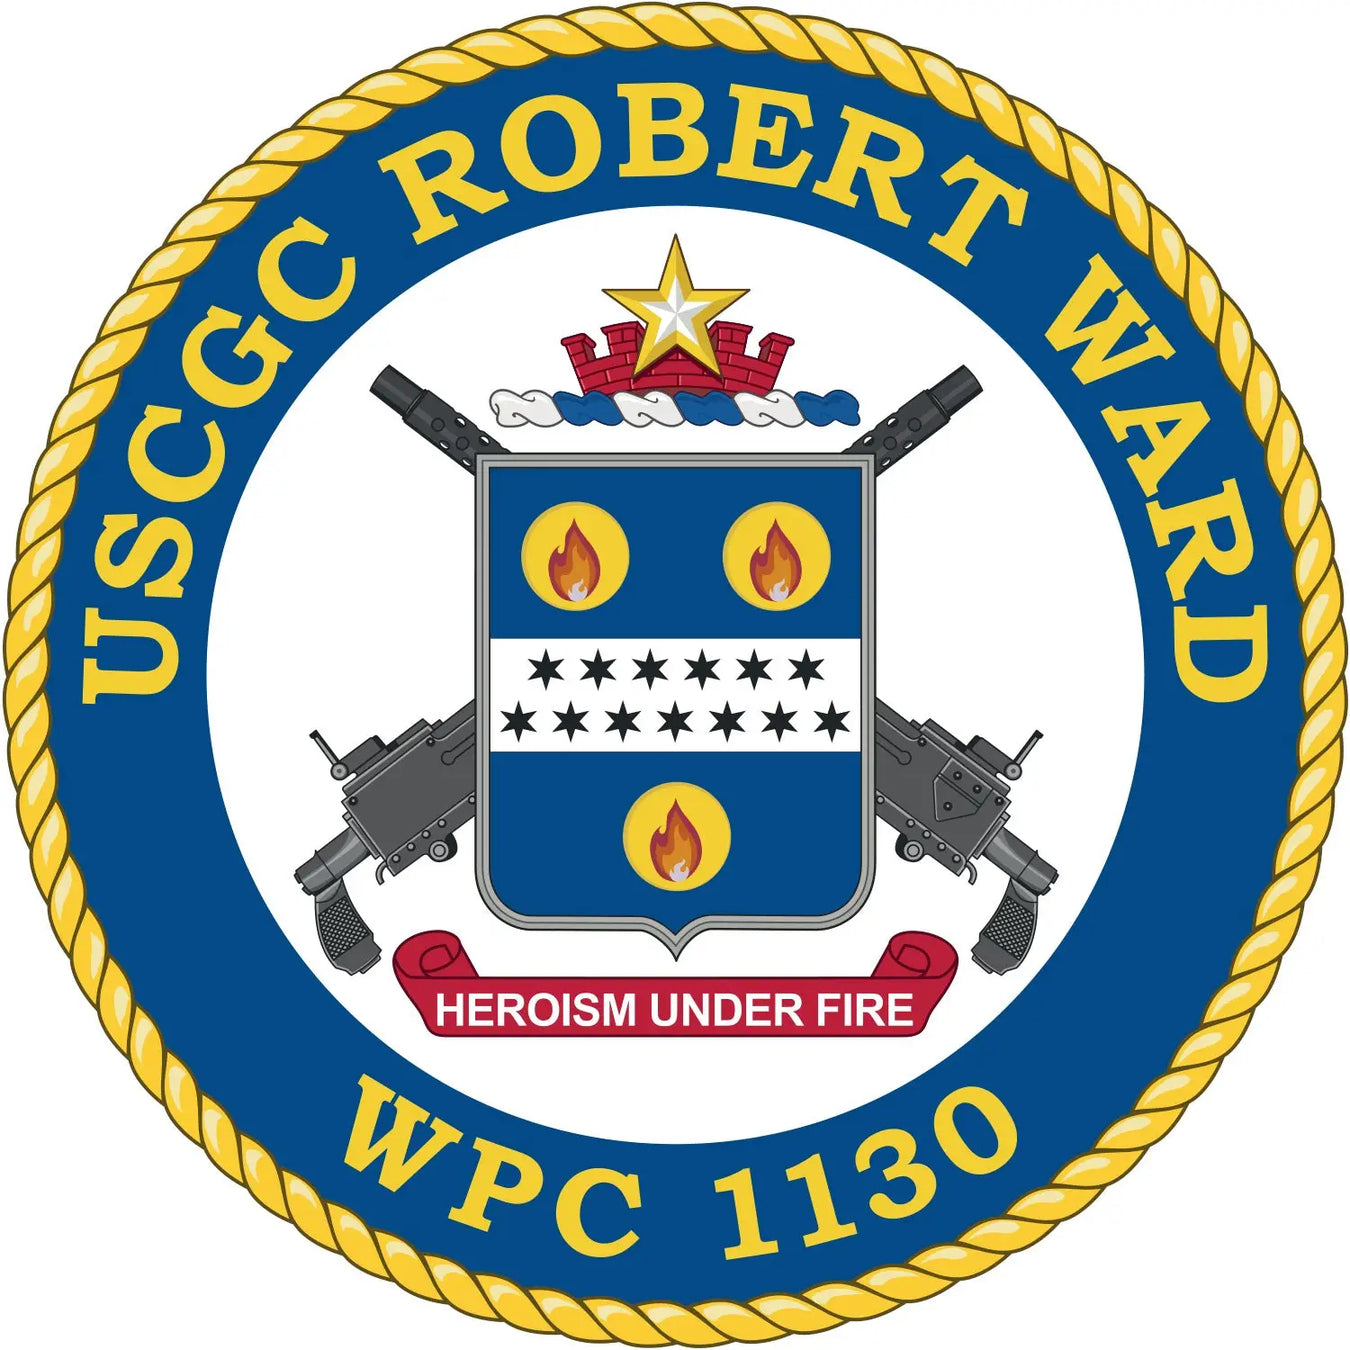 USCGC Robert Ward (WPC-1130)